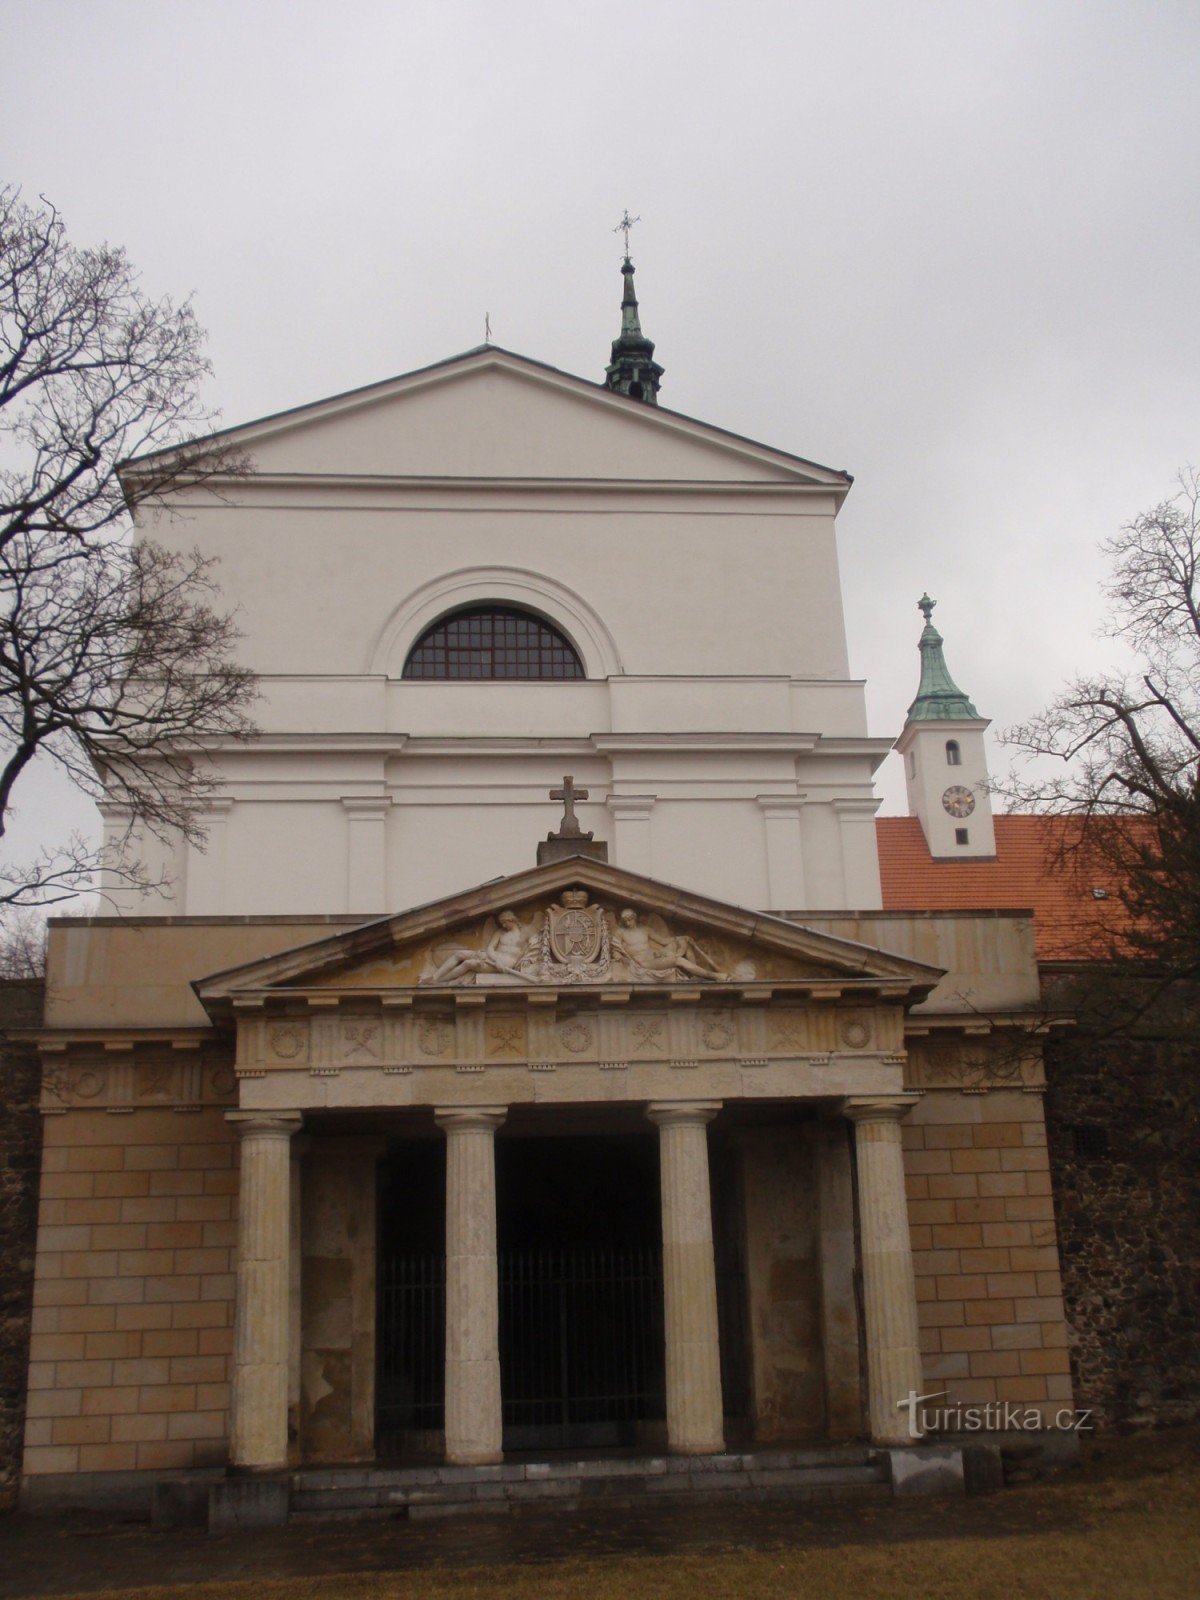 Liechtenstein grav i Vranov nær Brno